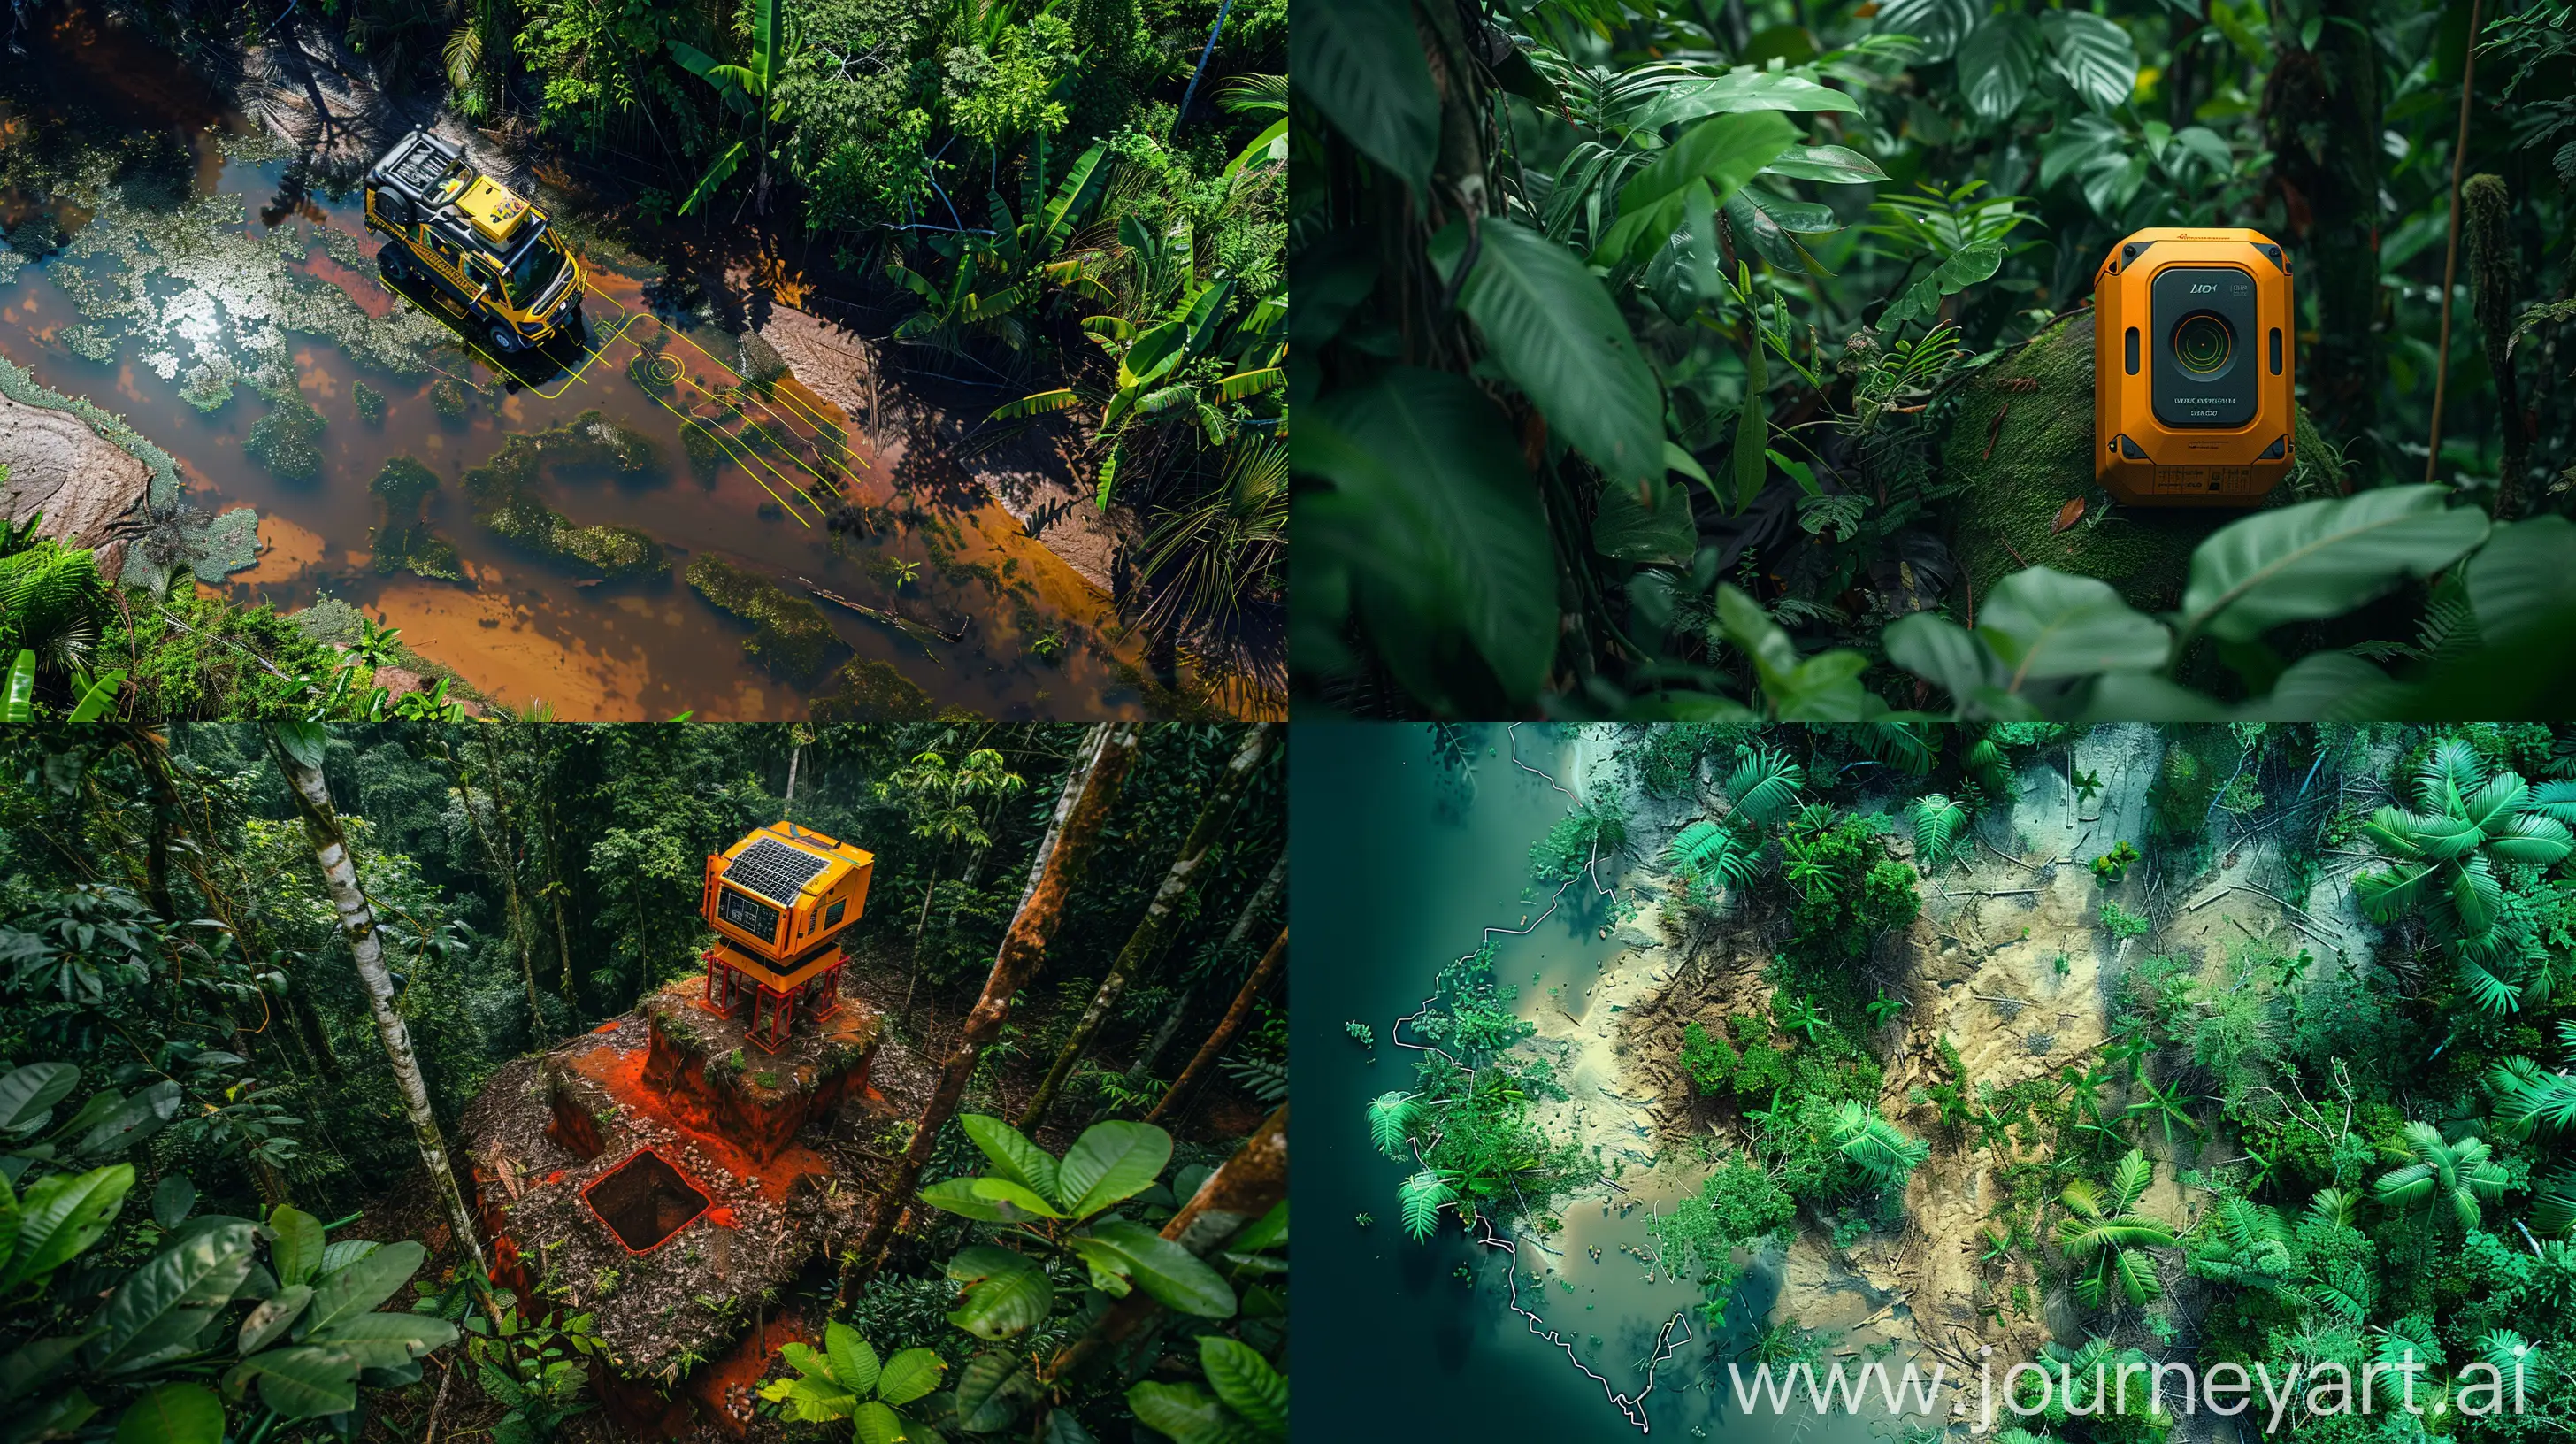 CuttingEdge-Lidar-Technology-Mapping-Amazon-Rainforest